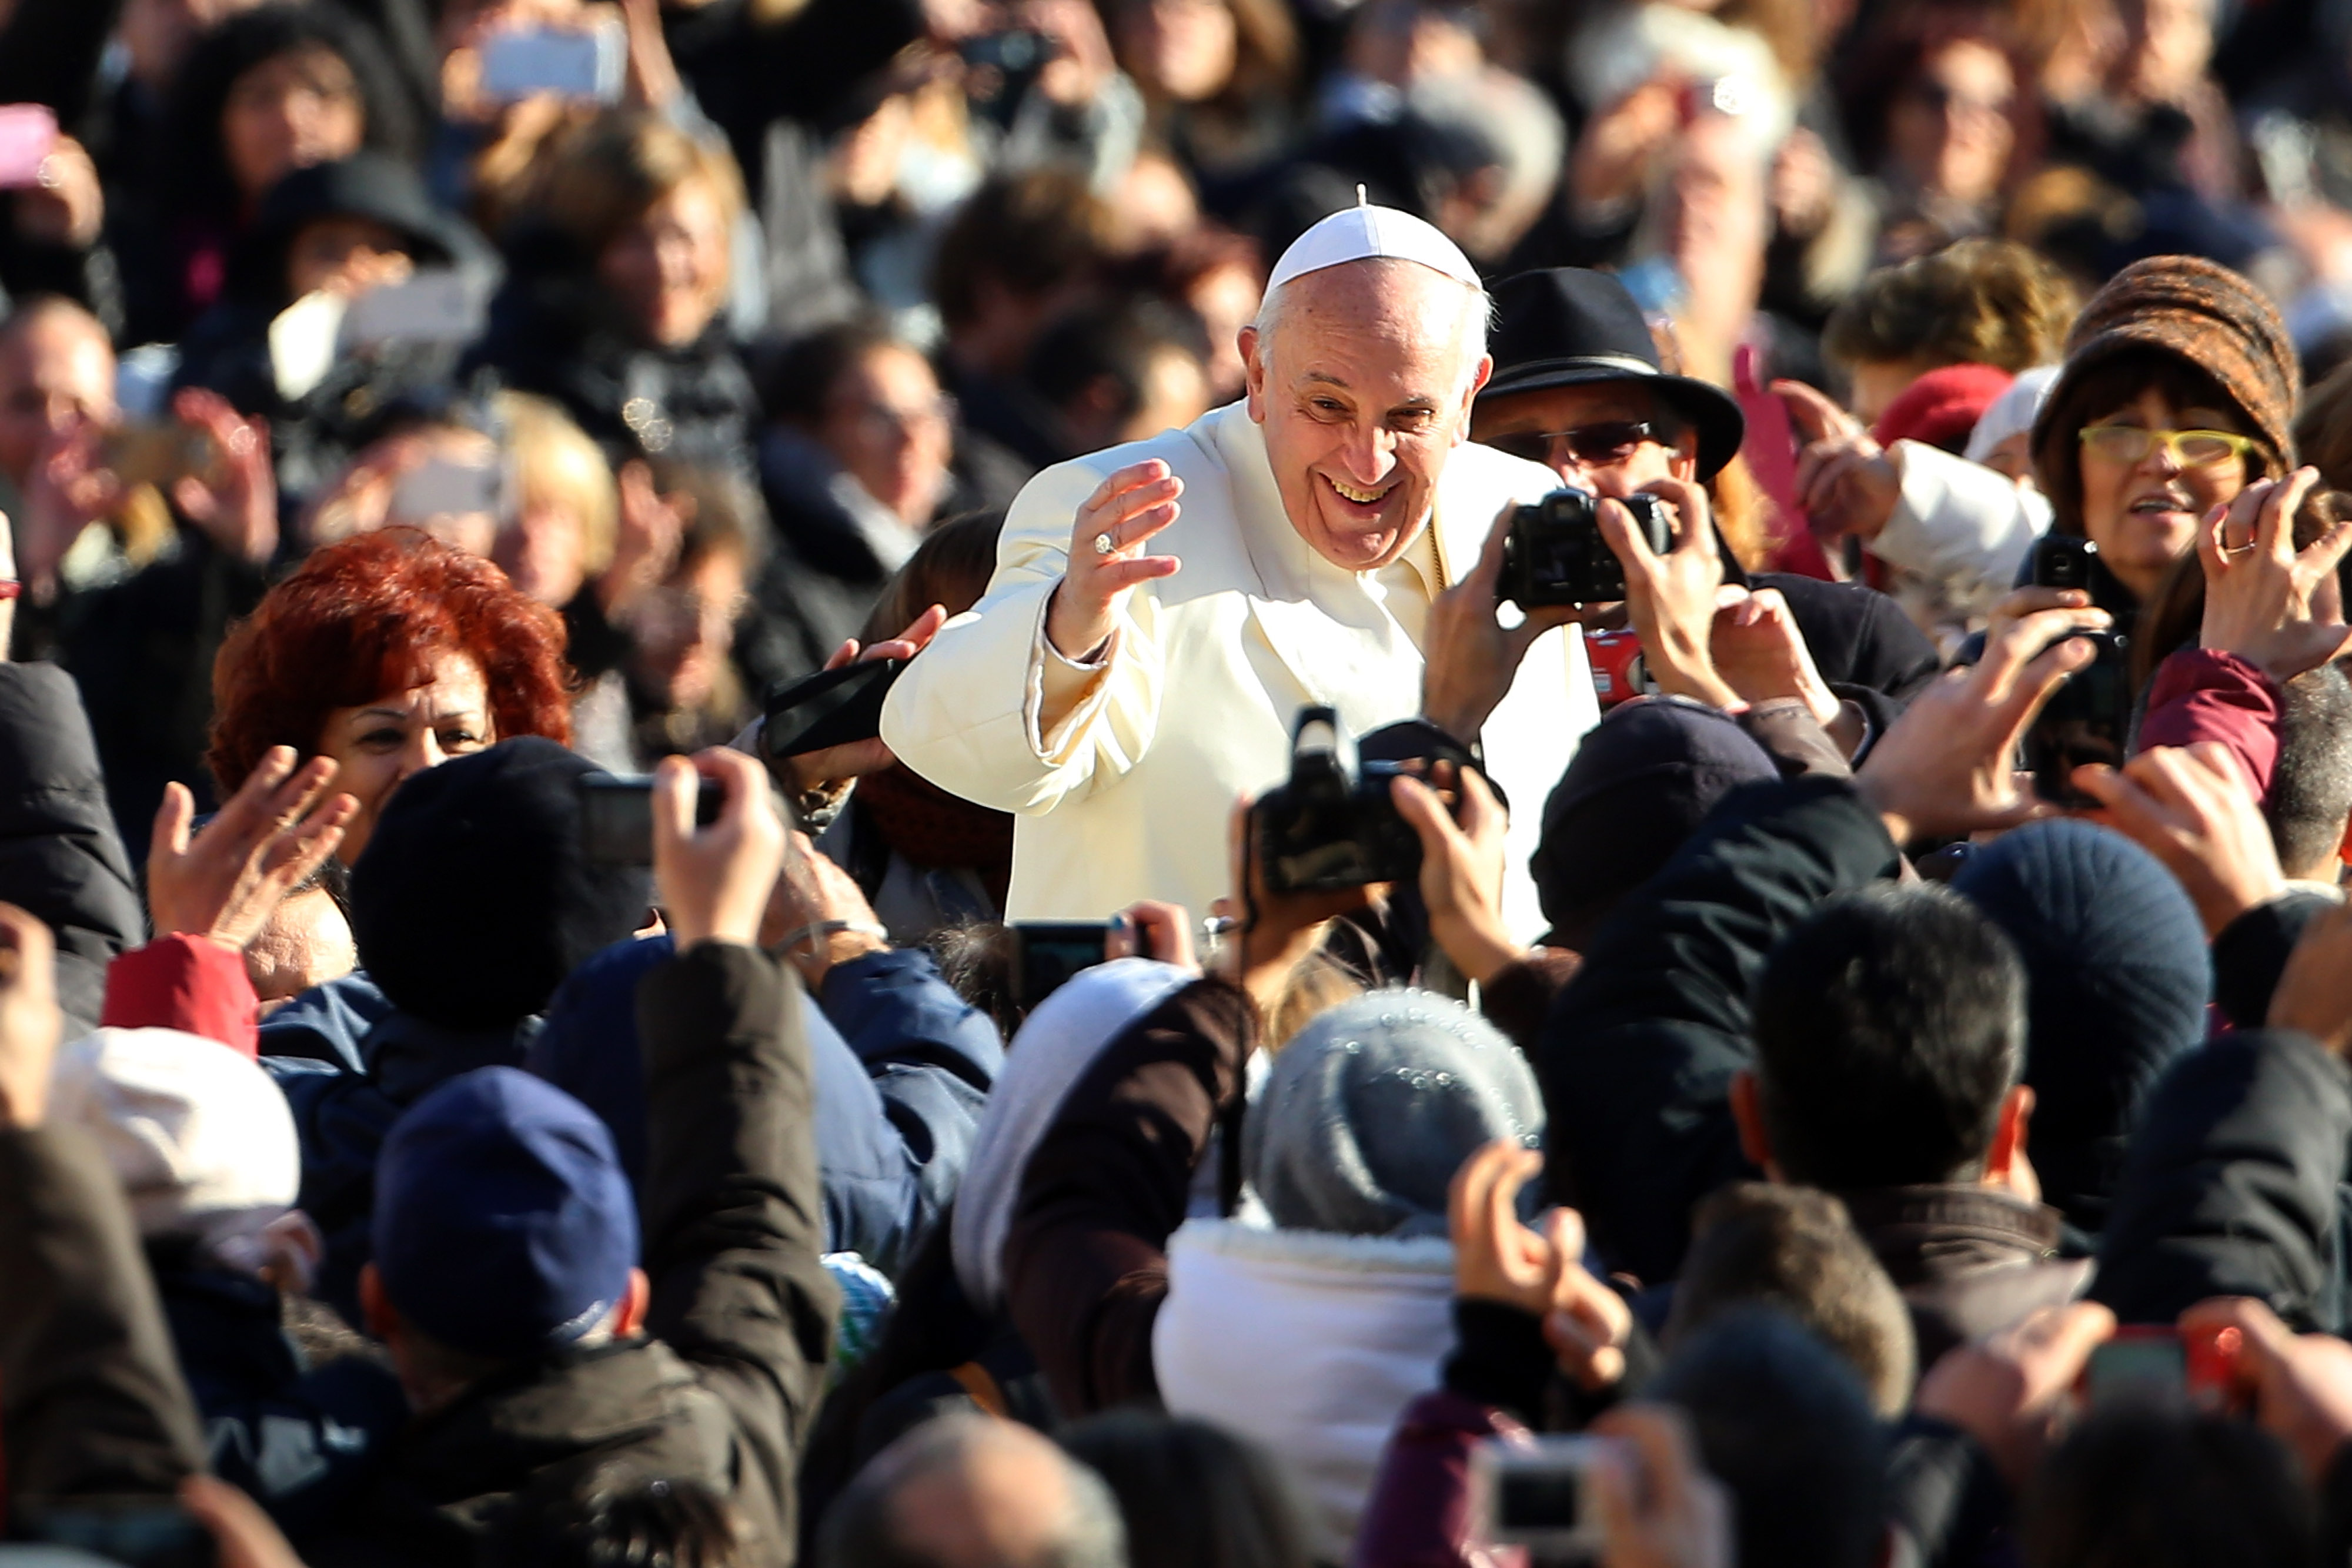 Francis Pope at WYD: "Make chaos" 